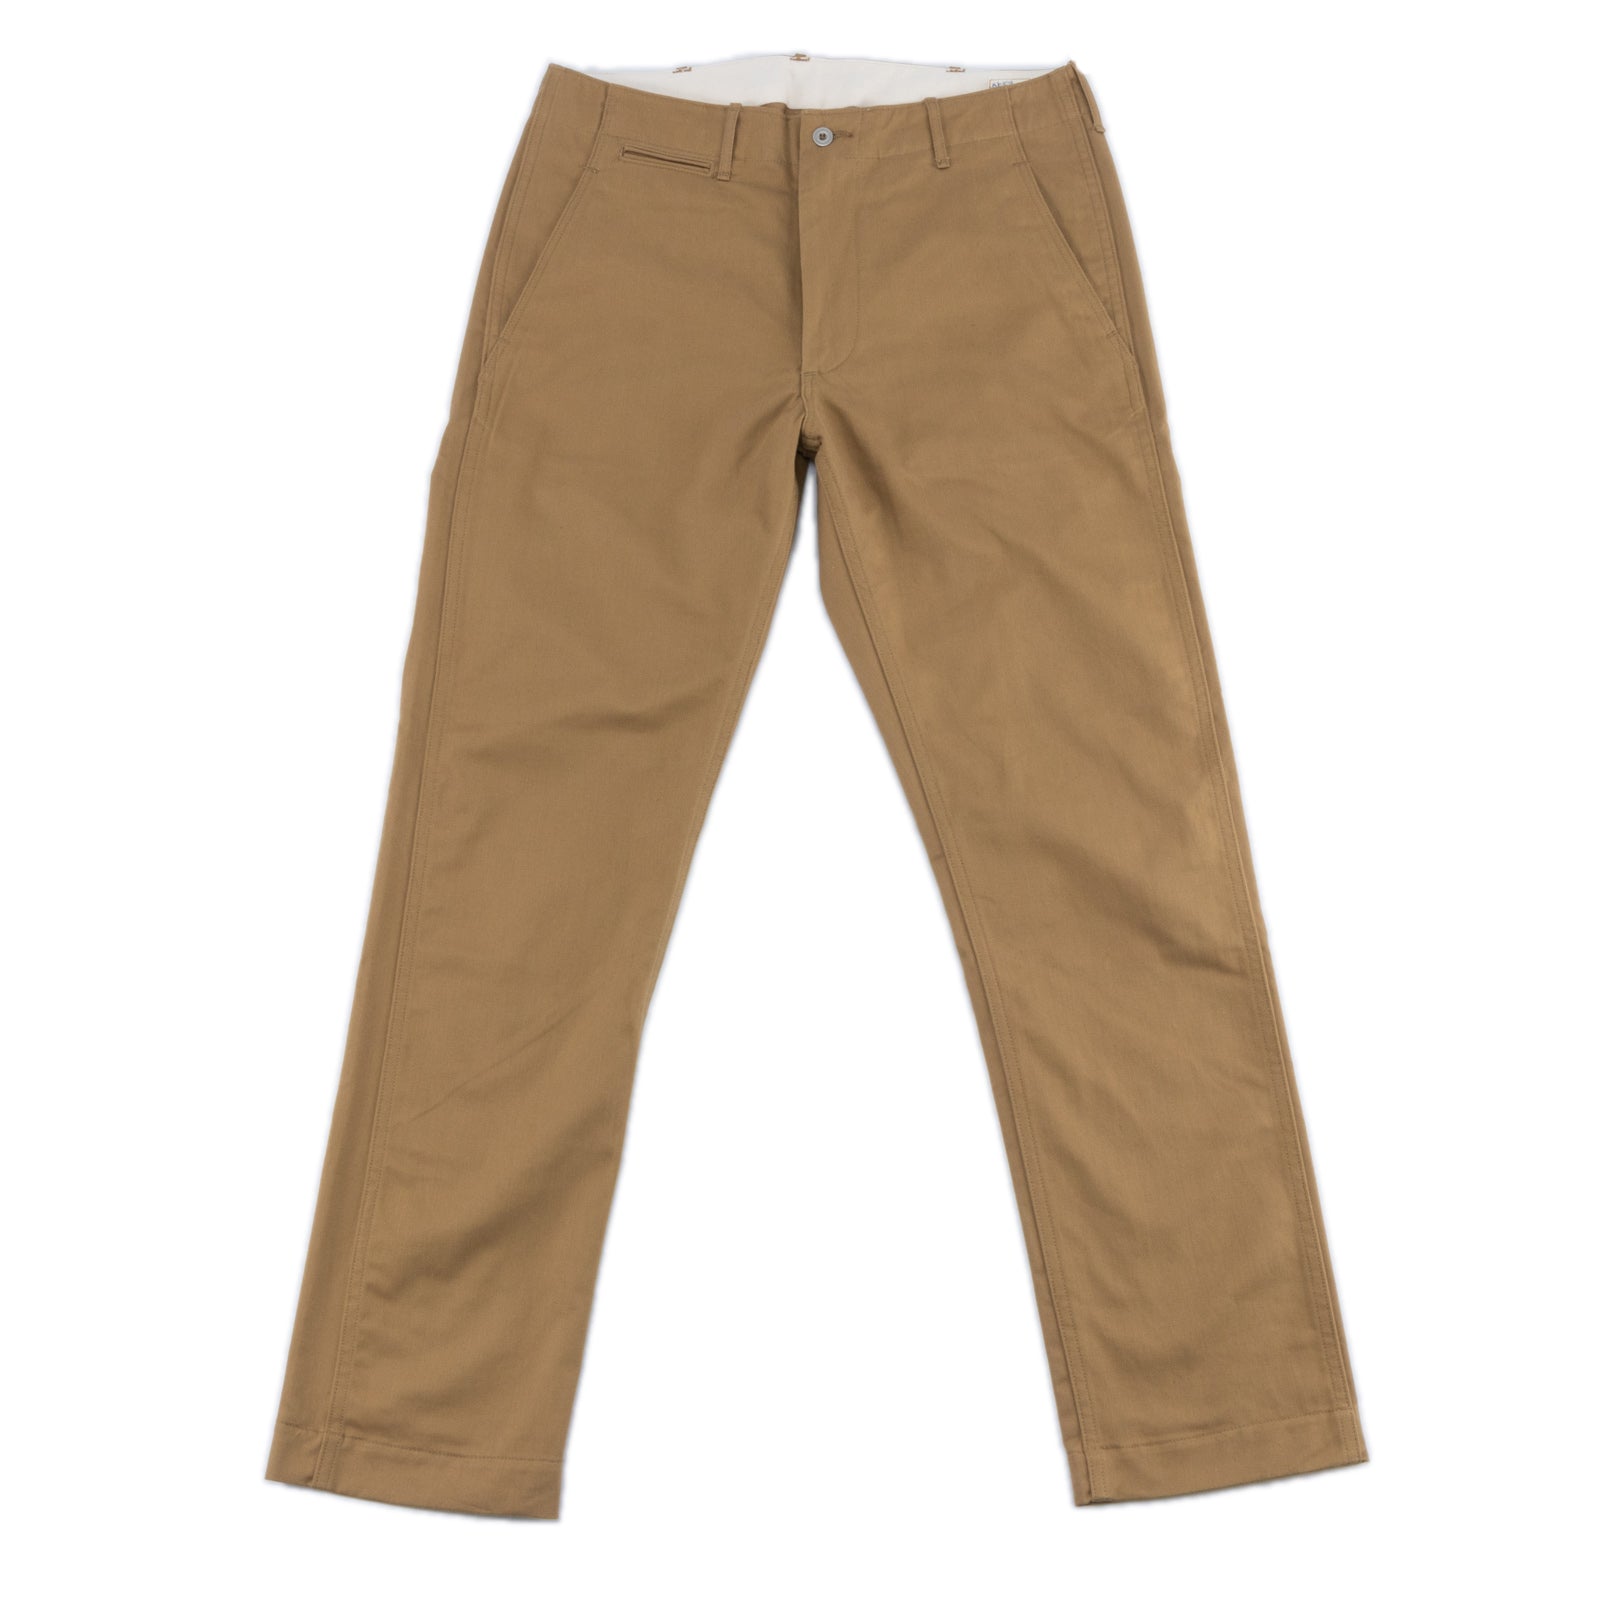 OrSlow Slim Fit Trouser - Khaki - Standard & Strange